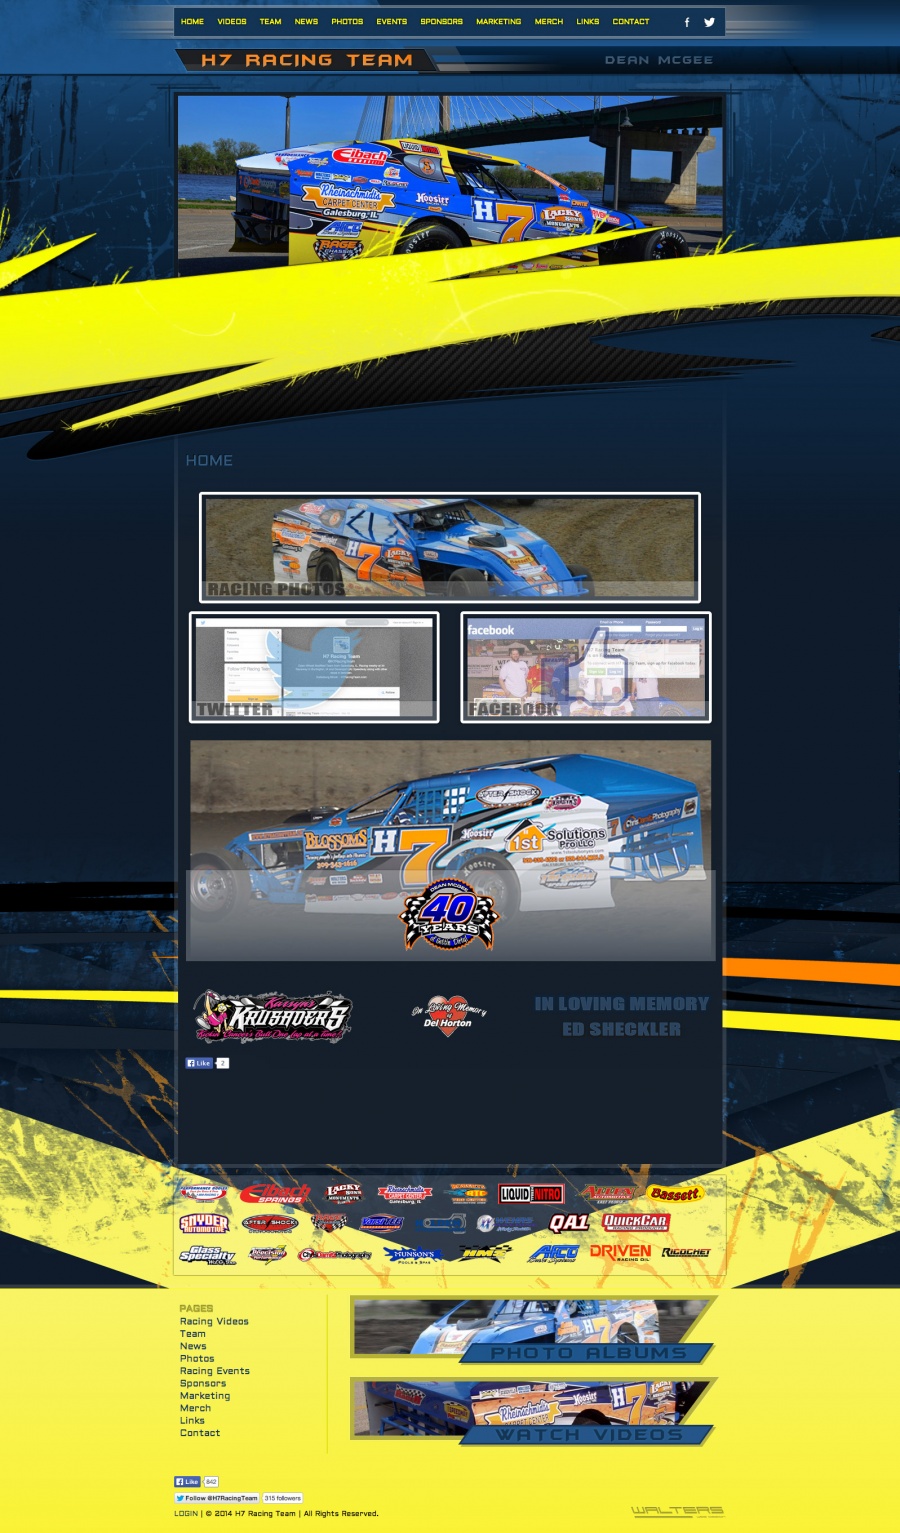 H7 Racing Team Website Design